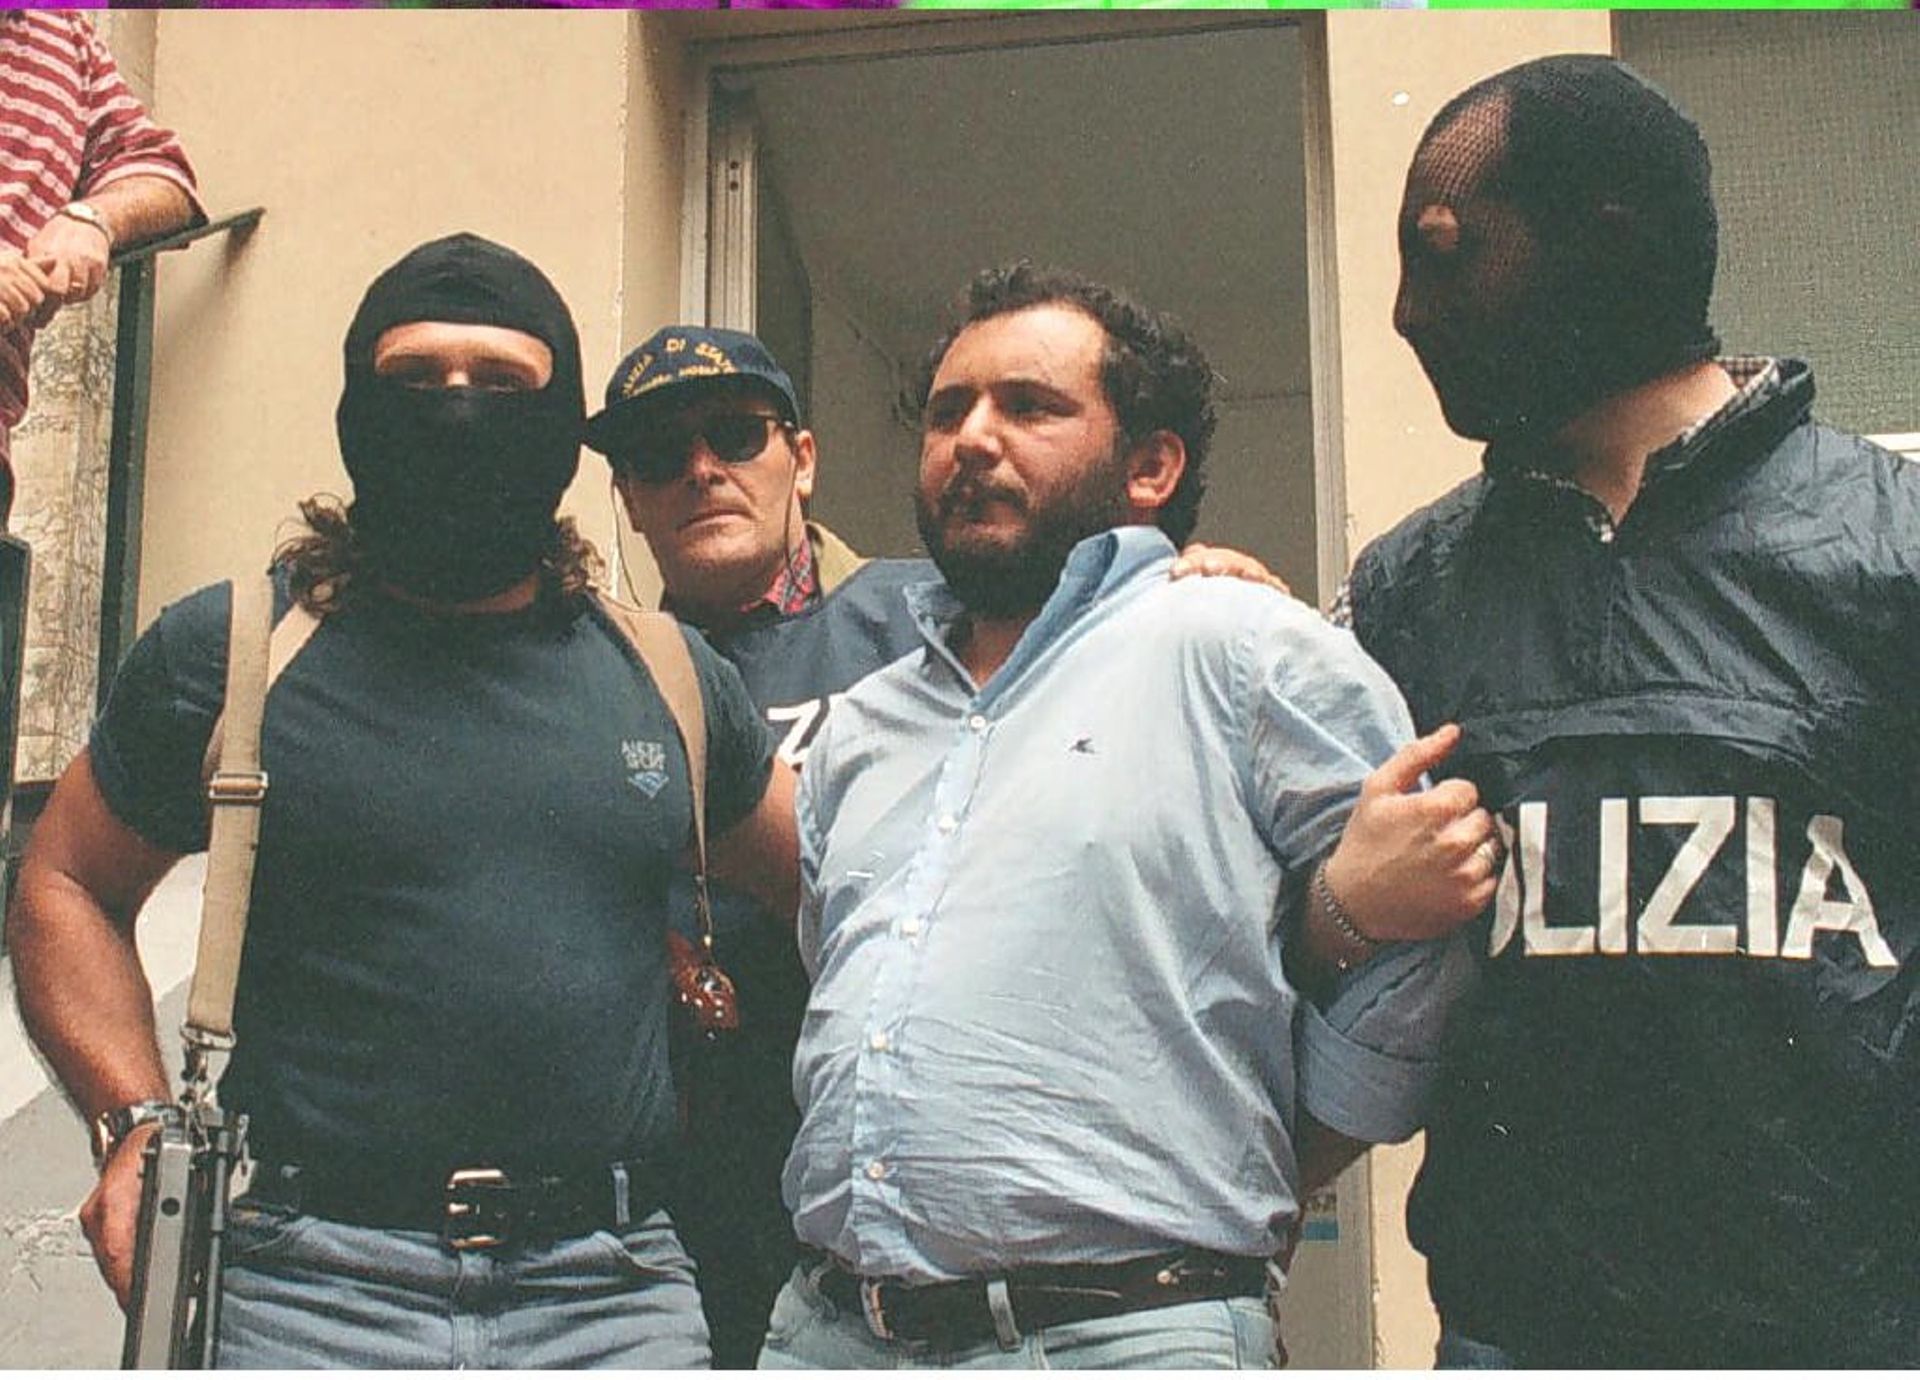 ITALIE : libération du mafieux Giovanni Brusca, assassin du juge Falcone